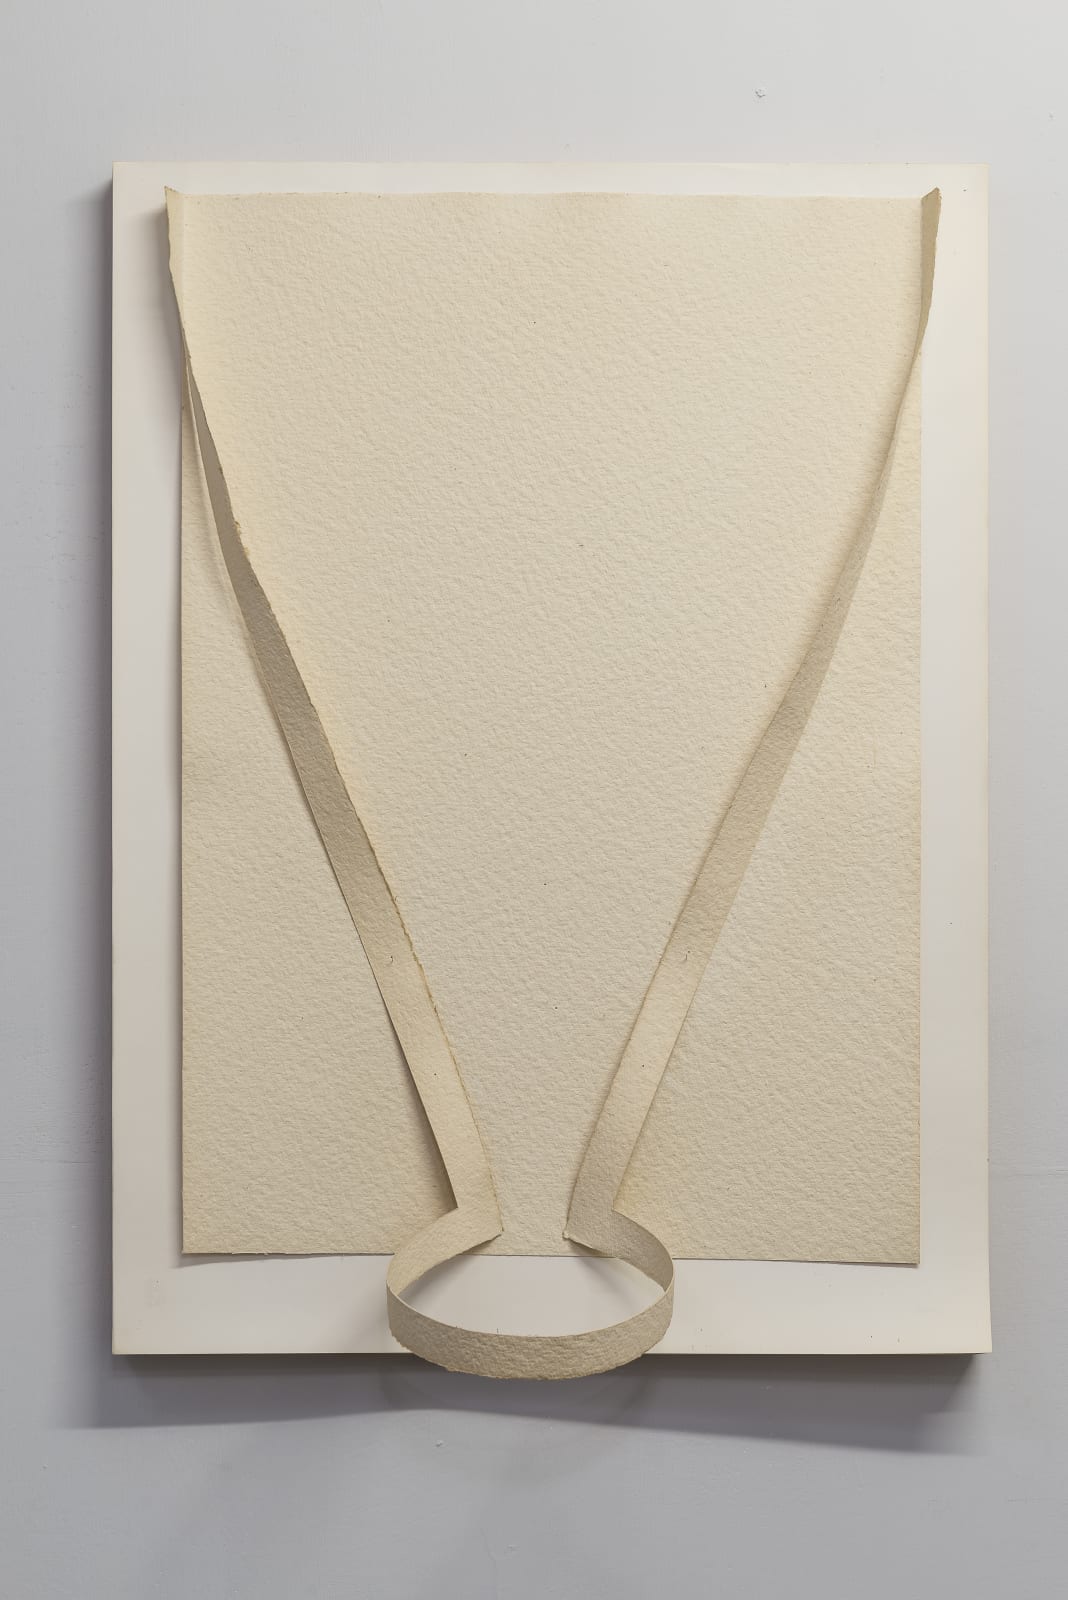 Hidetoshi Nagasawa, Work in paper, Arco d'Alibert, 2008, paper, cm 83,5 x 63